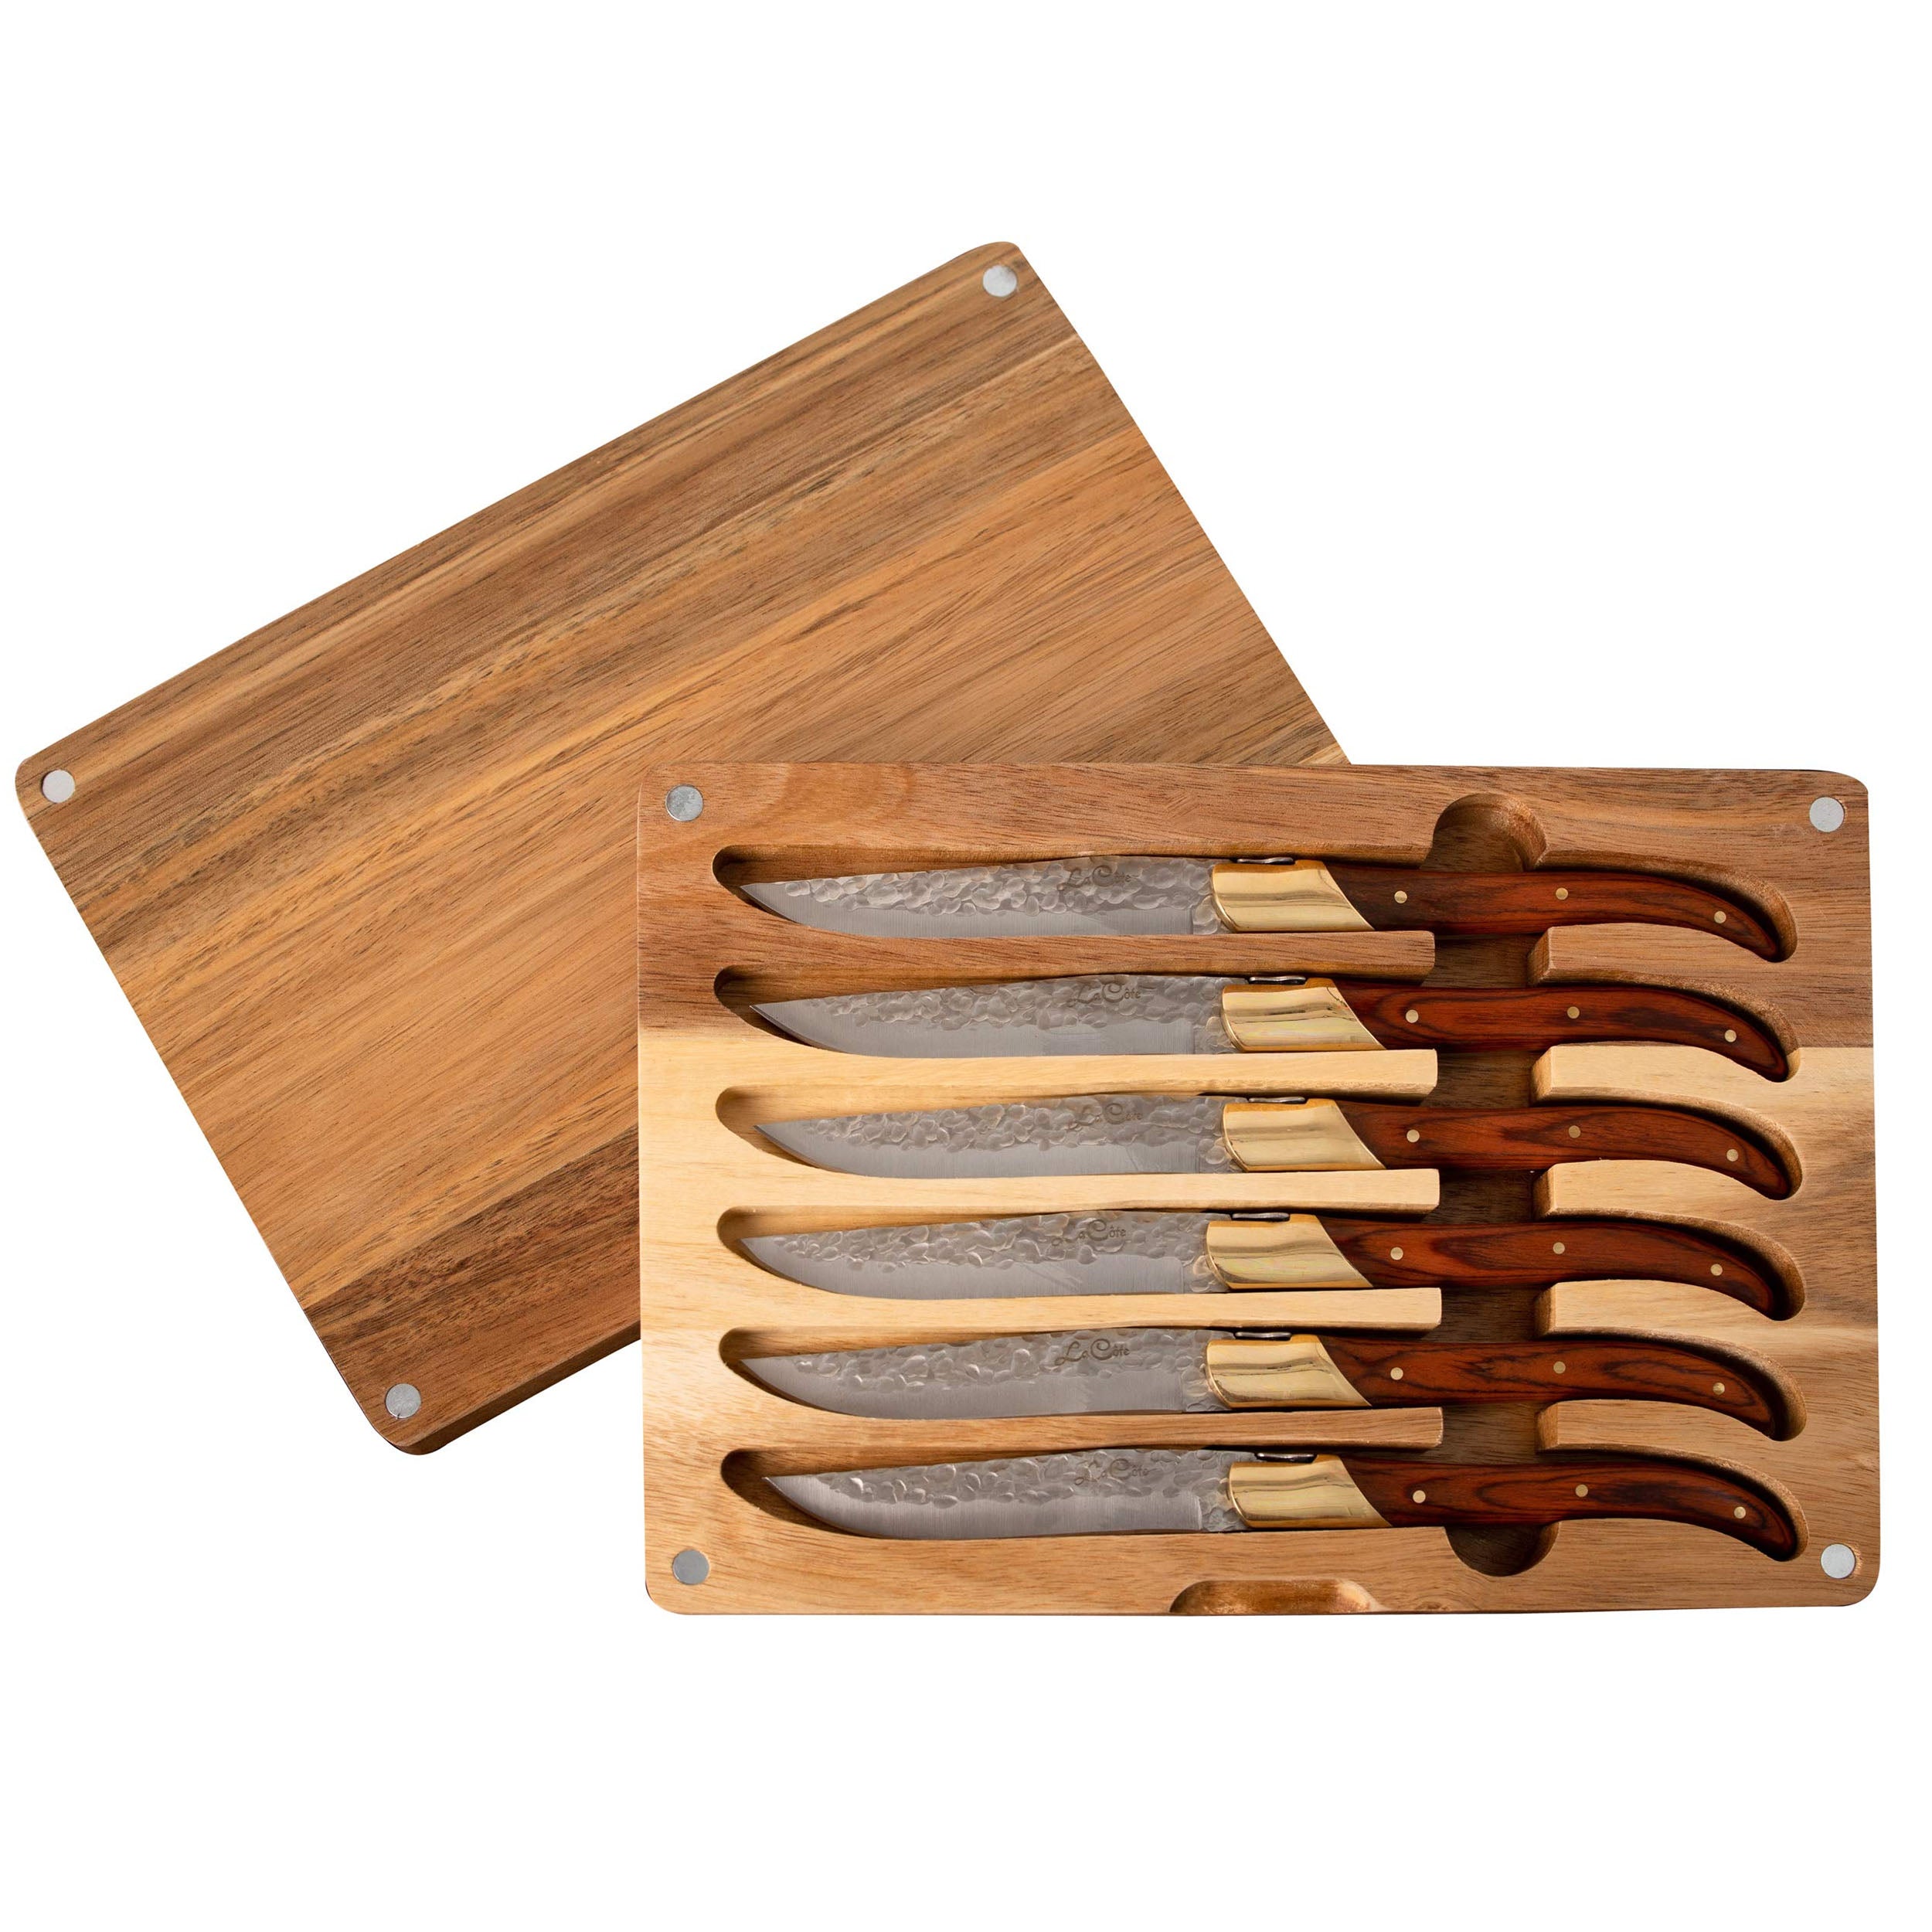 La Cote 6 Piece Pakka Wood Cupreous Steak Knives Set Japanese Stainless Steel Wood Handle In Gift Box (6 PC Pakka Wood With Acacia Wood Box)